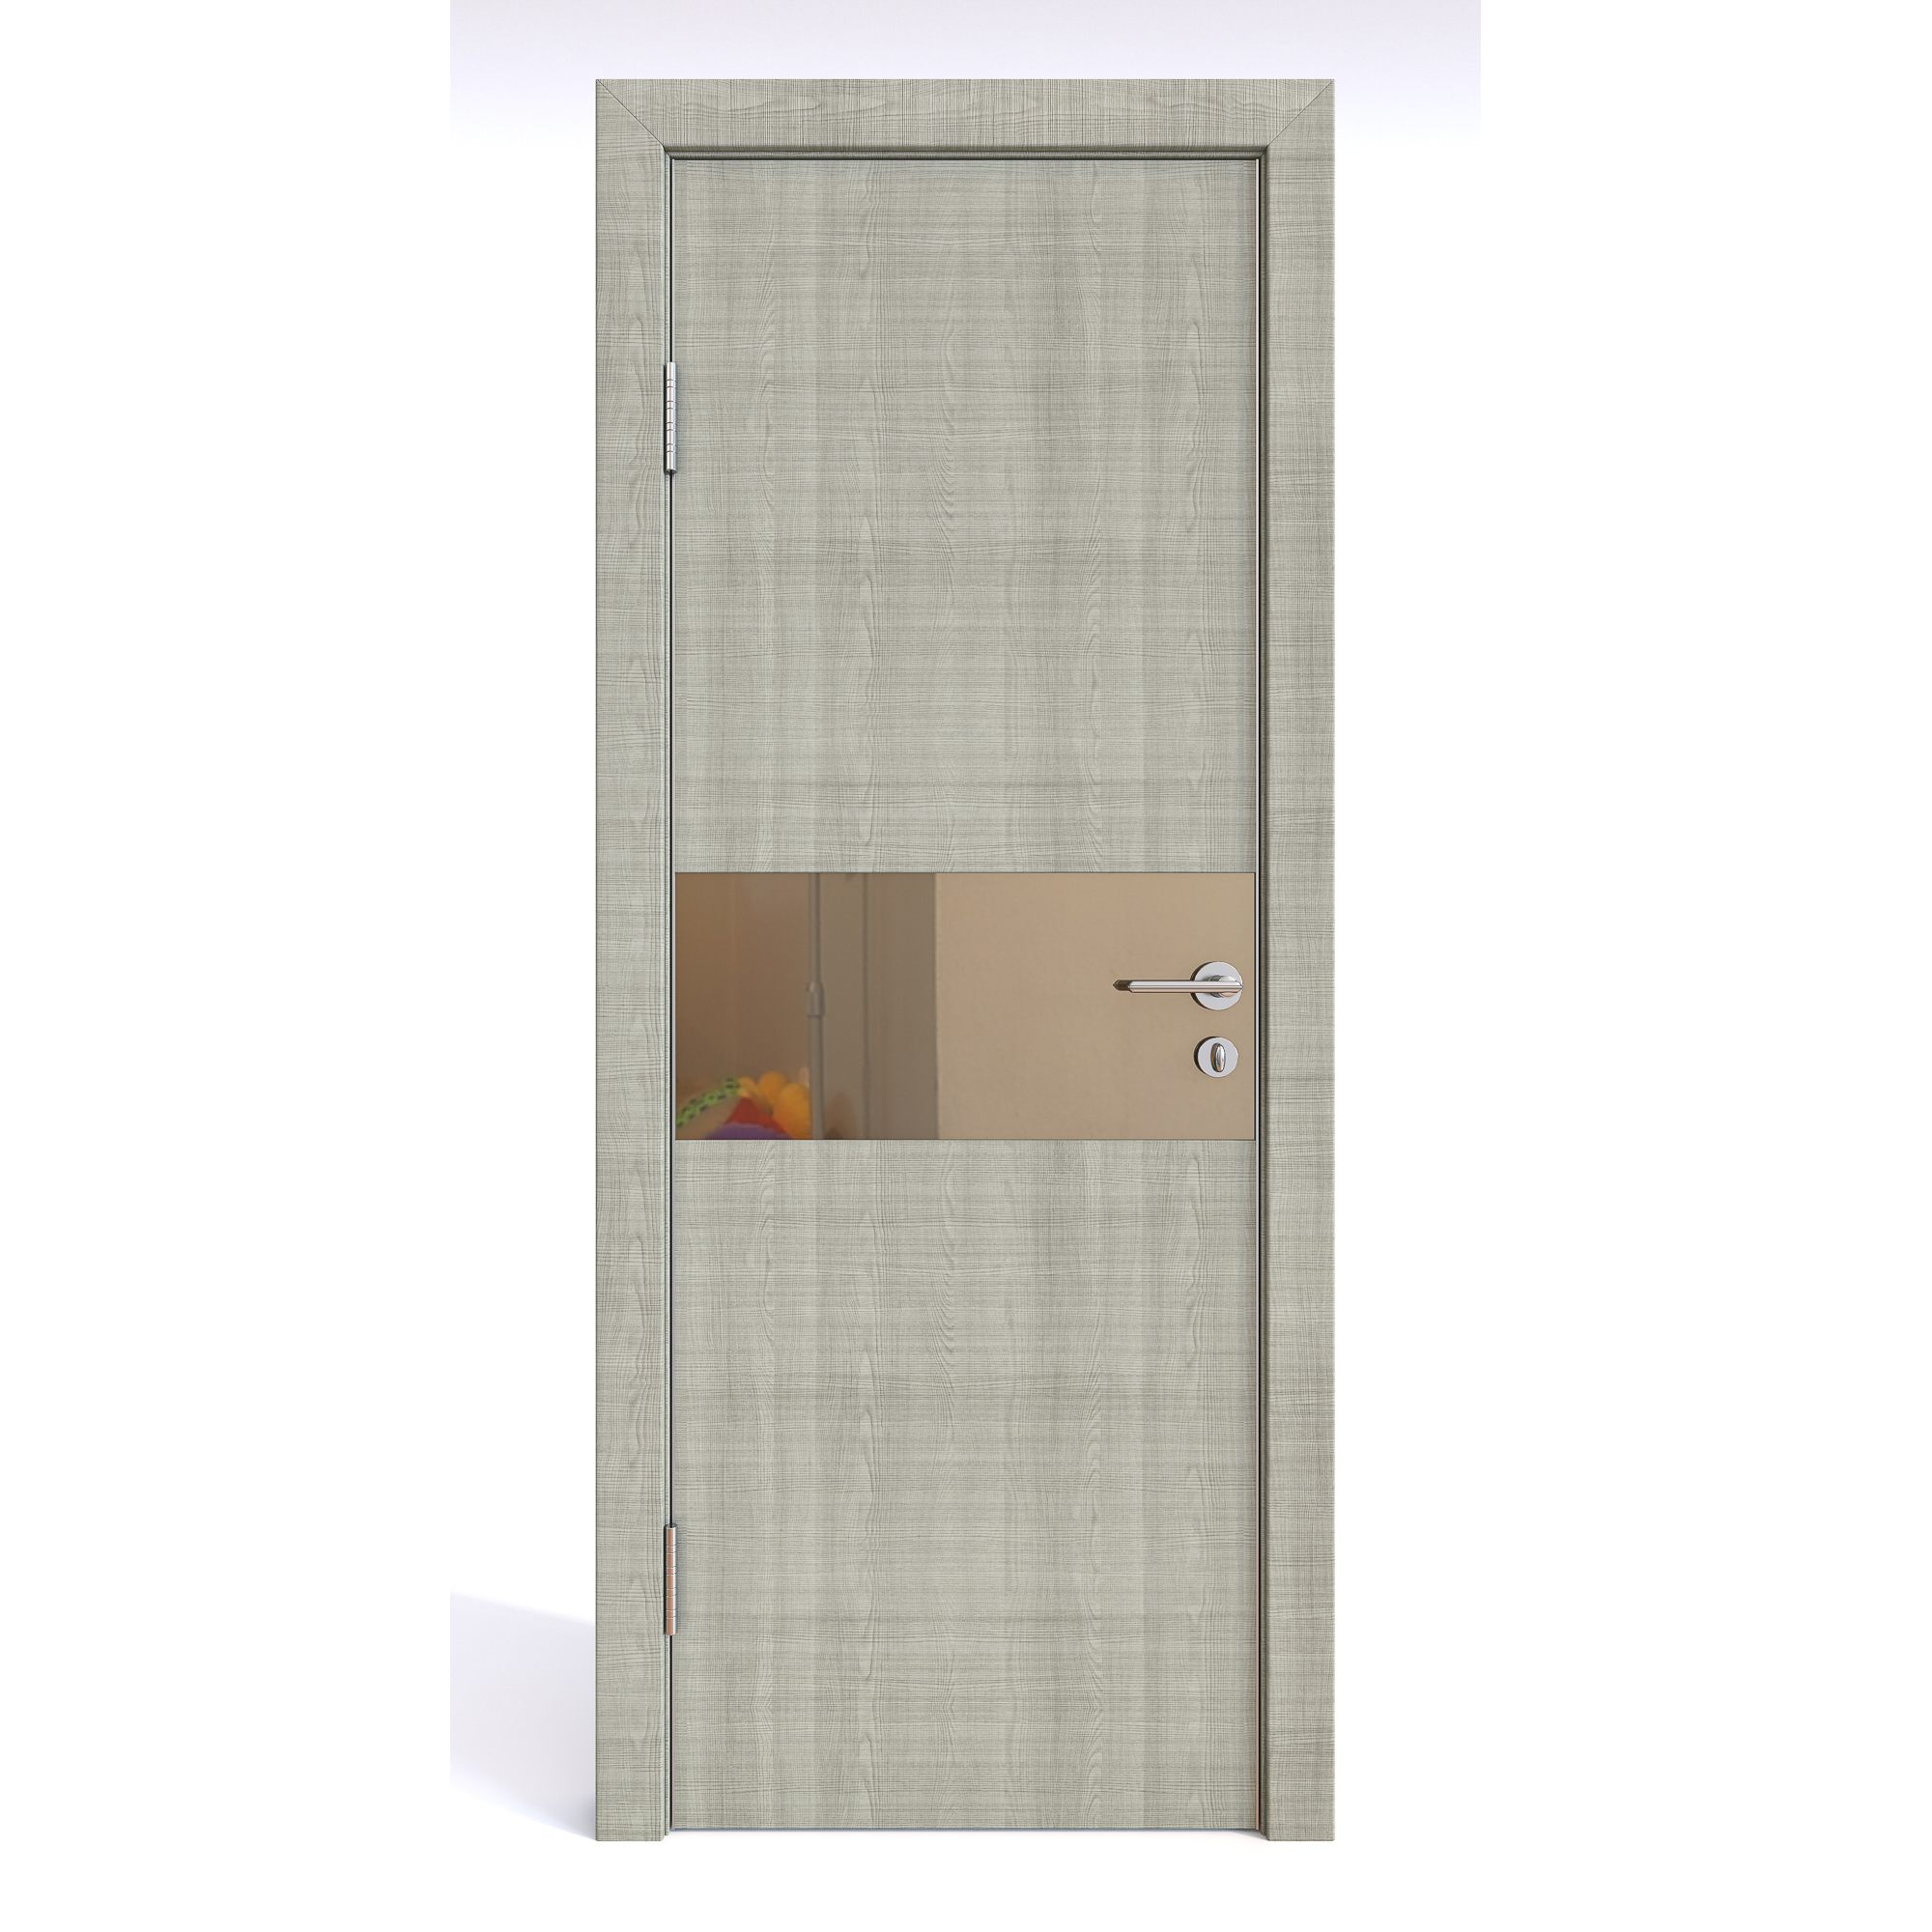 фото Межкомнатная дверь до-501 серый дуб/бронза 200х60 дверная линия